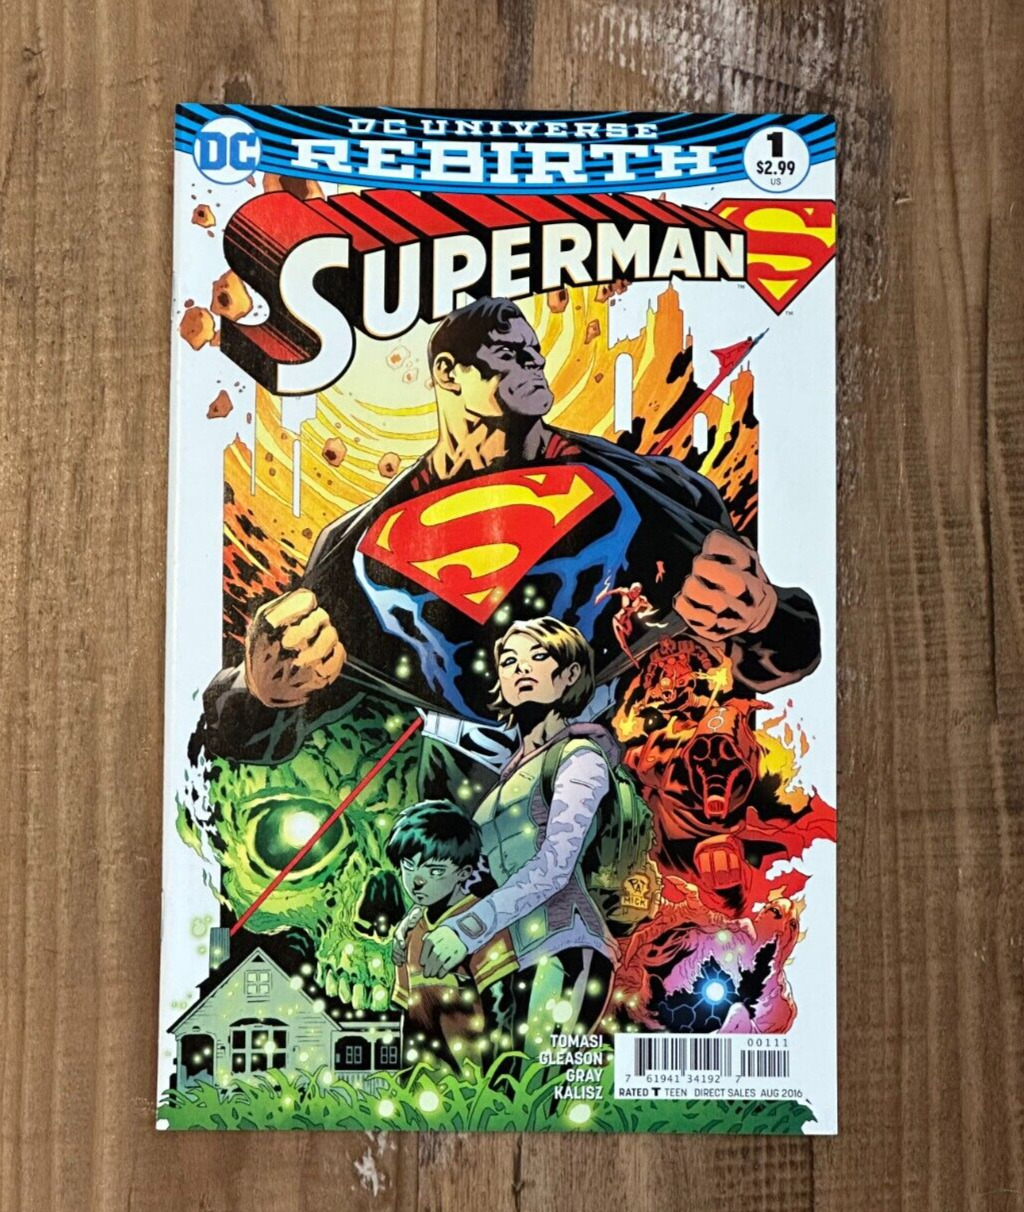 DC Universe Rebirth Superman #1 (DC Comics, 2018)